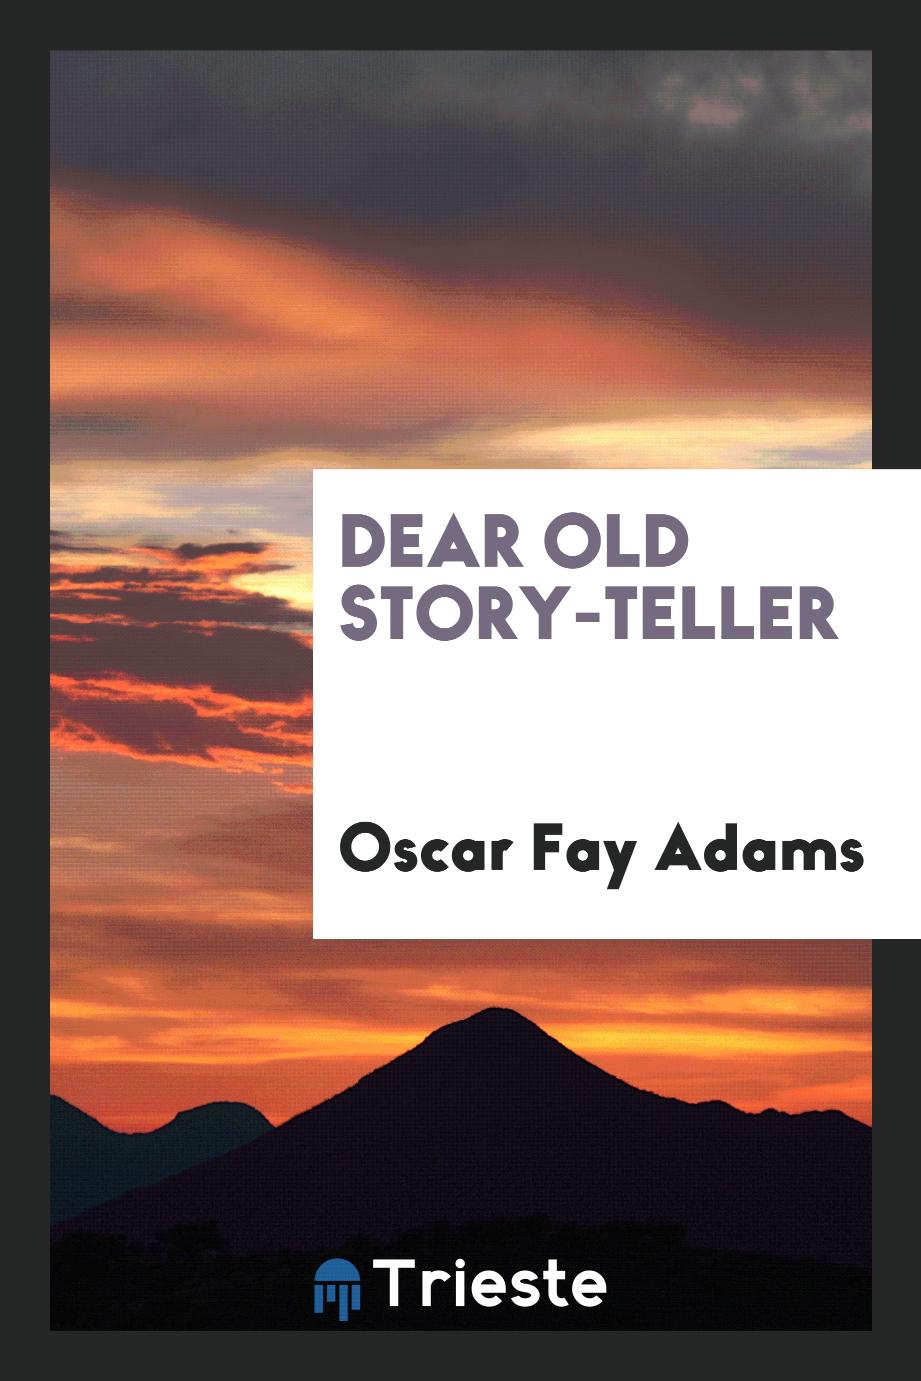 Dear Old story-teller